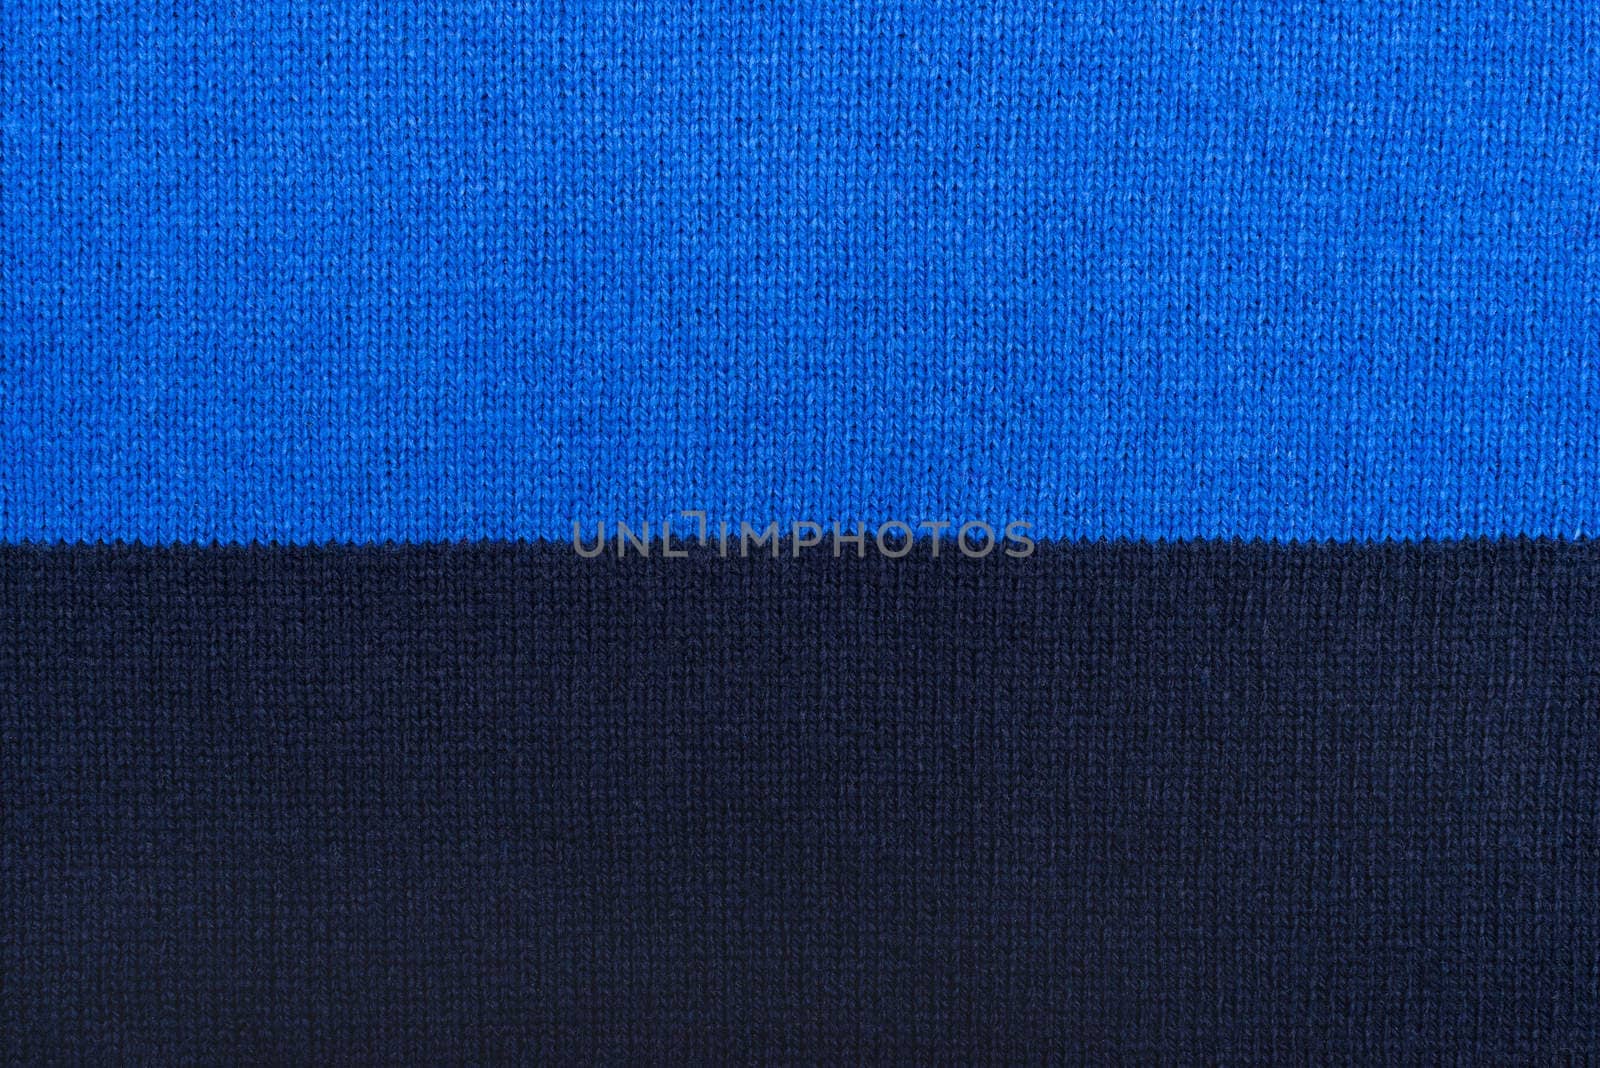 Knit woolen texture. Fabric blue background by DNKSTUDIO